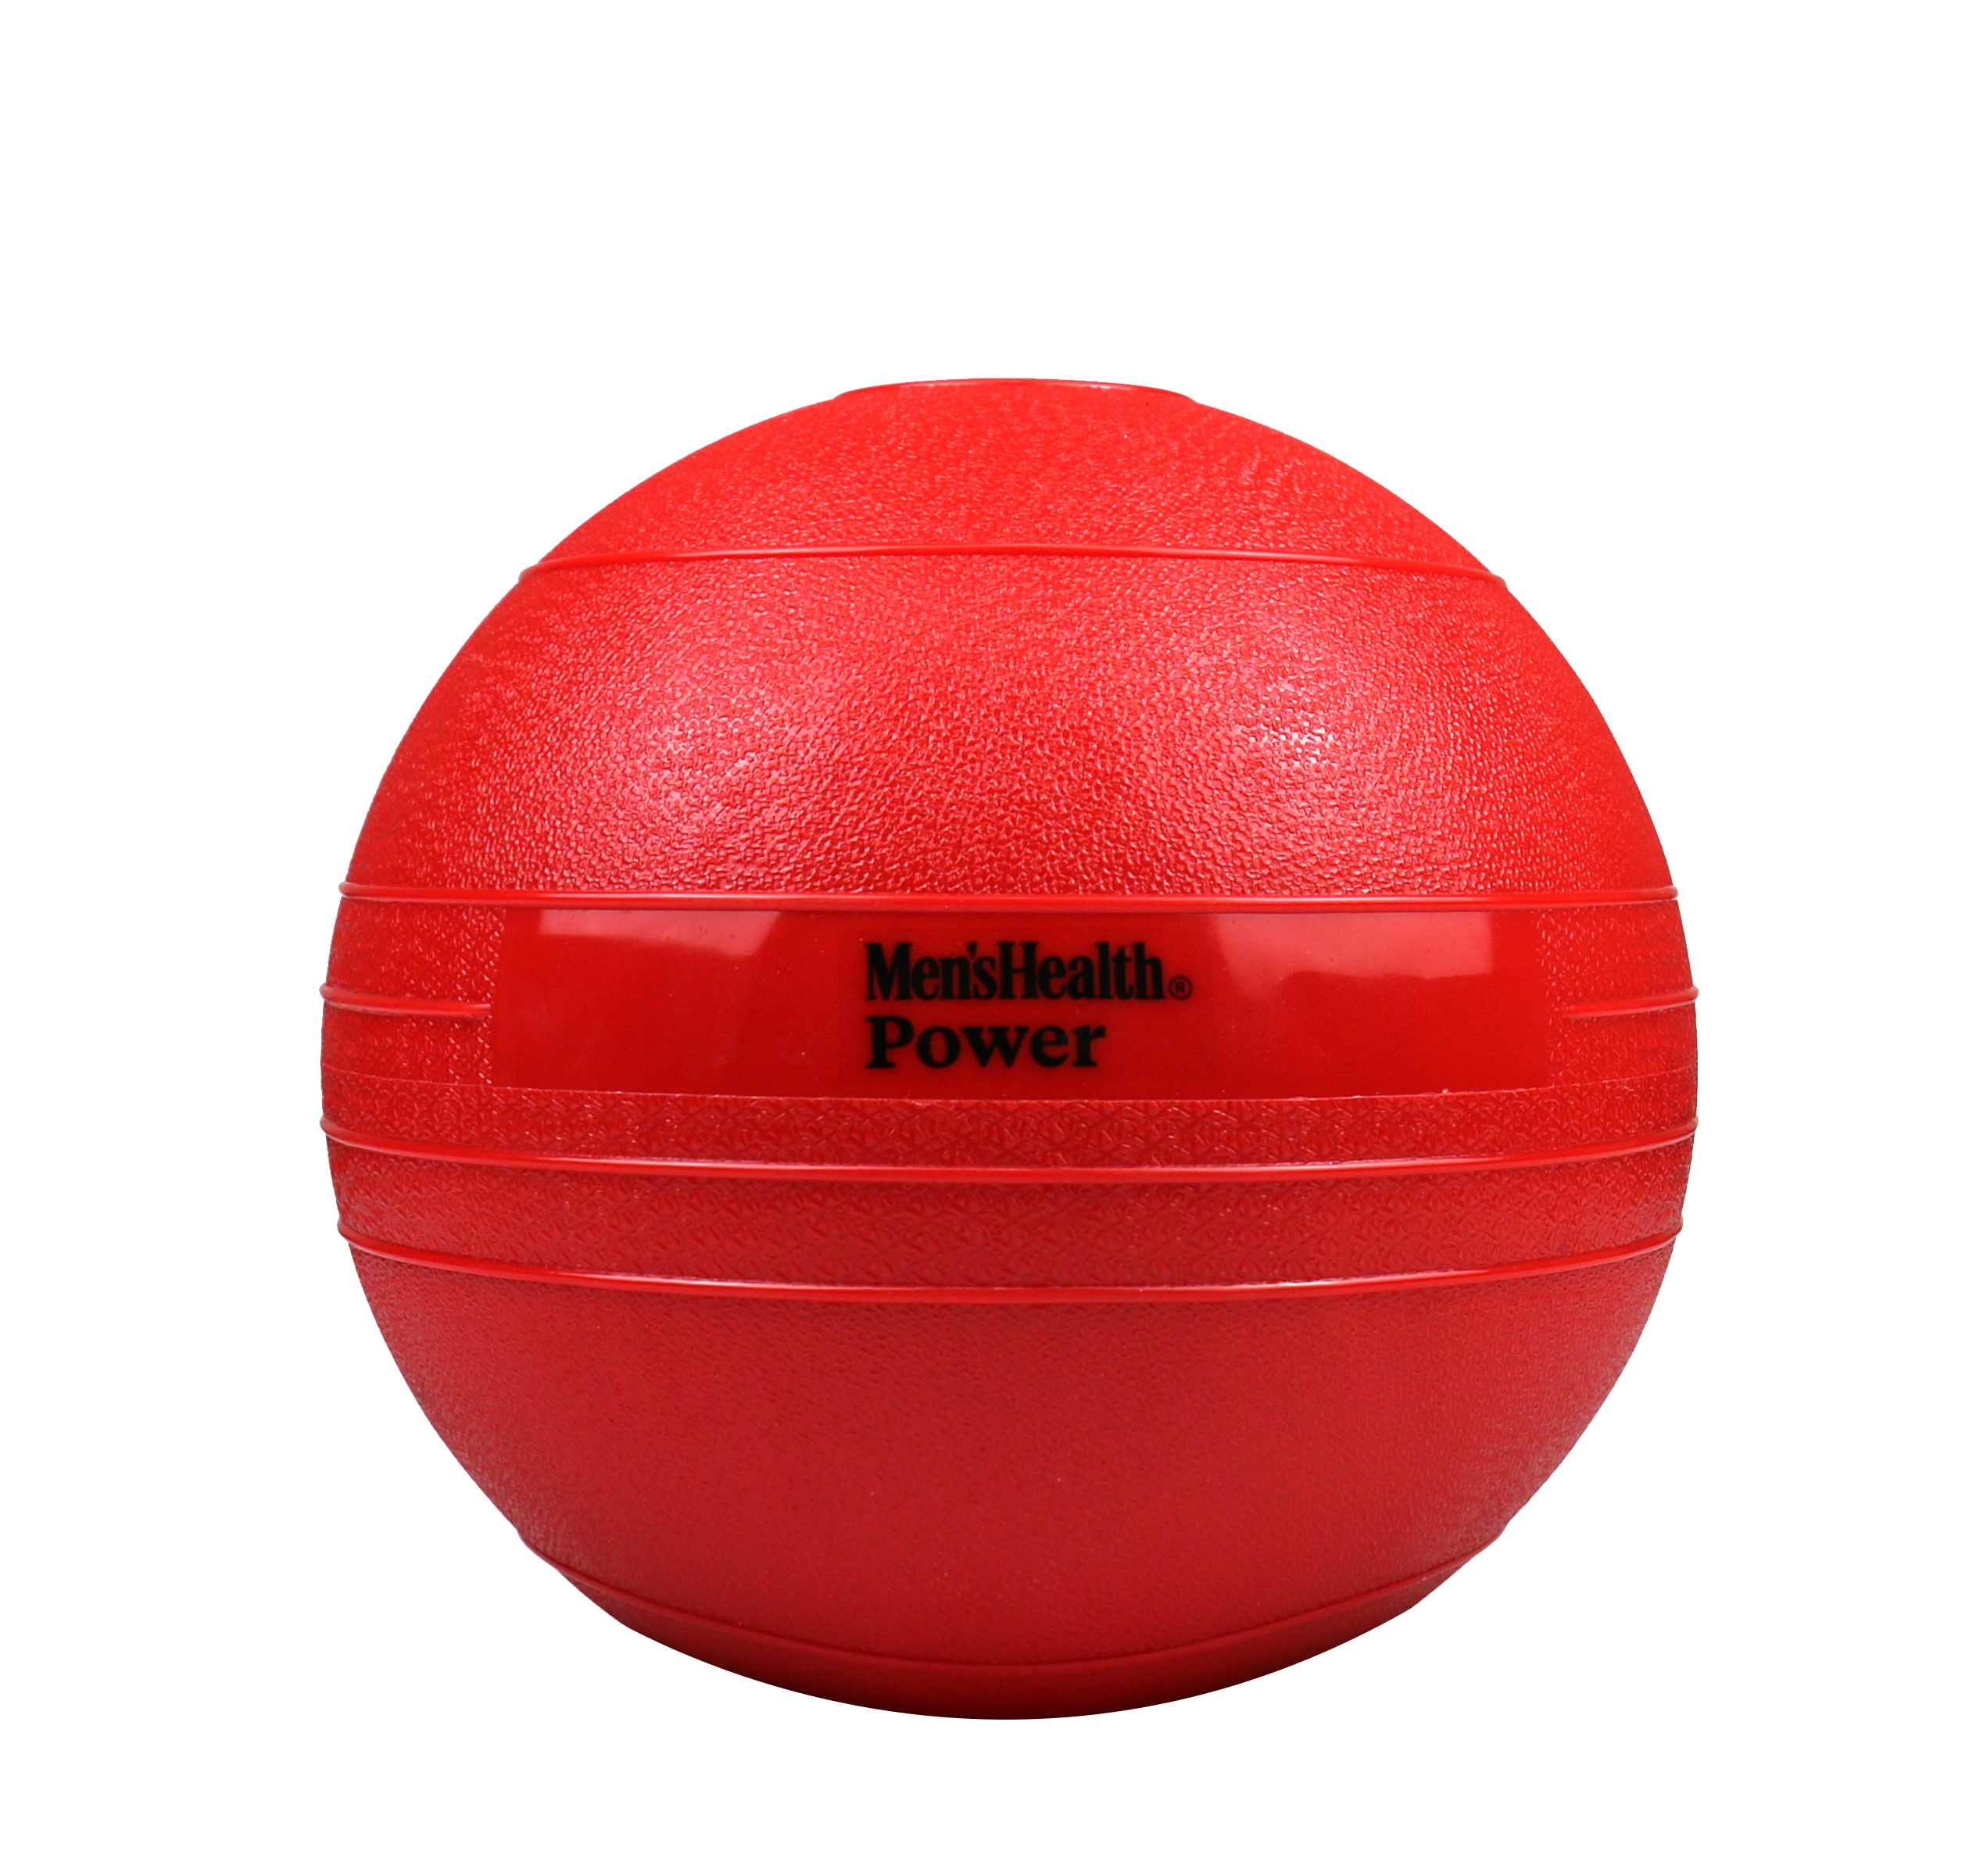 Menshealth Slam Ball - 10 kg